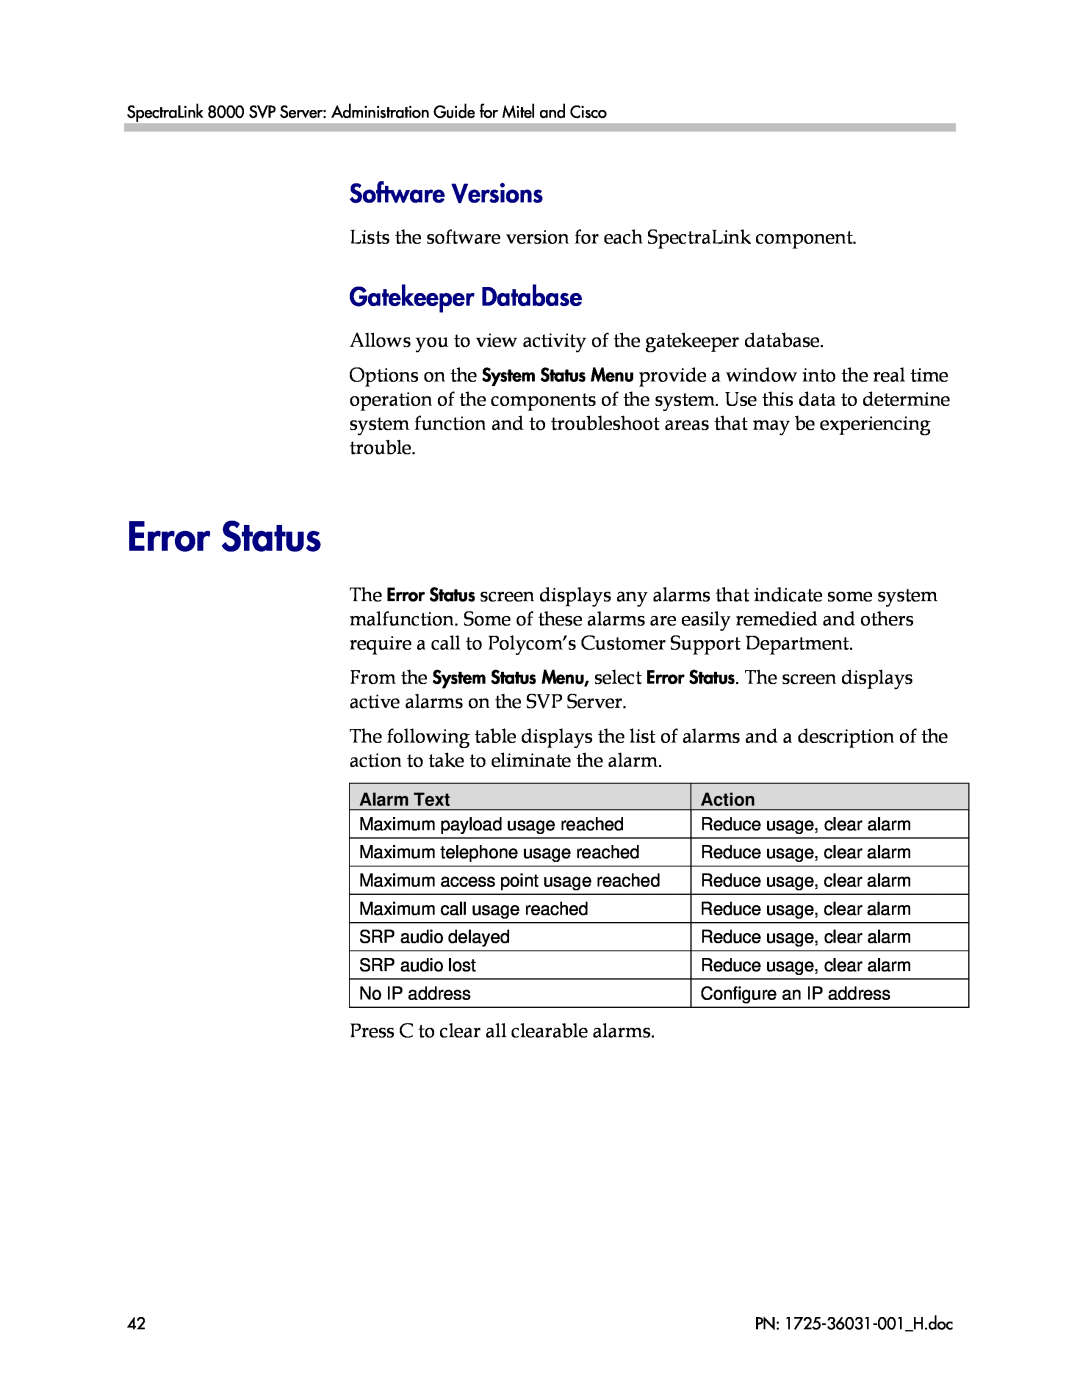 Polycom VP010, 1725-36031-001 manual Error Status, Software Versions, Gatekeeper Database 